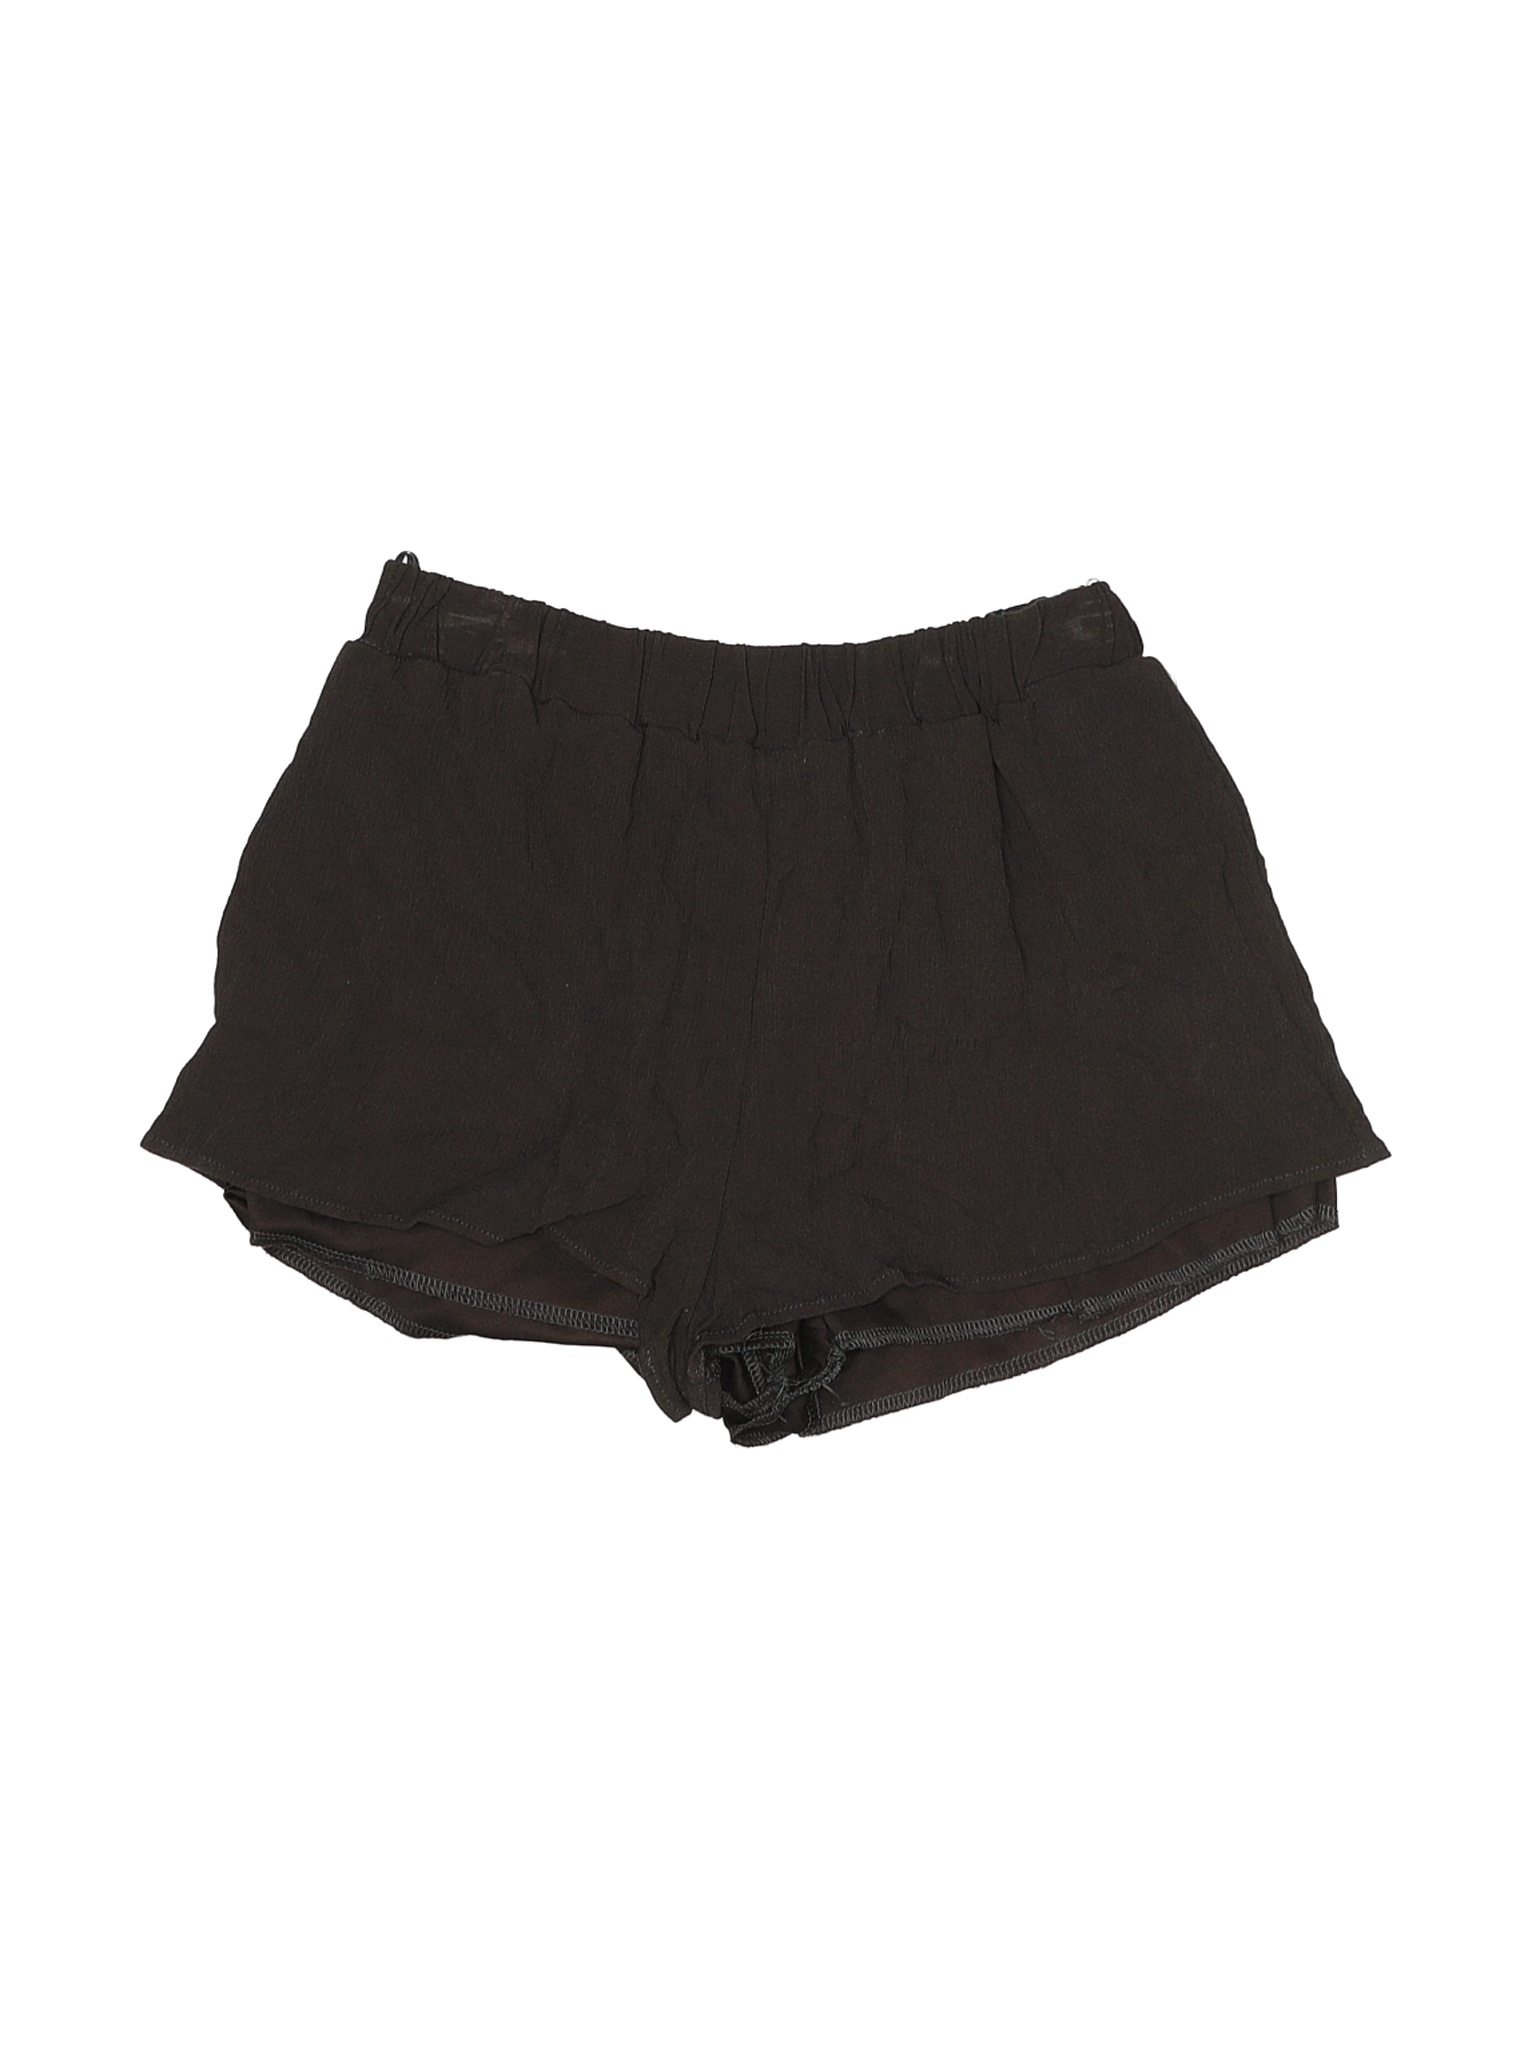 Assorted Brands Women Black Shorts M | eBay